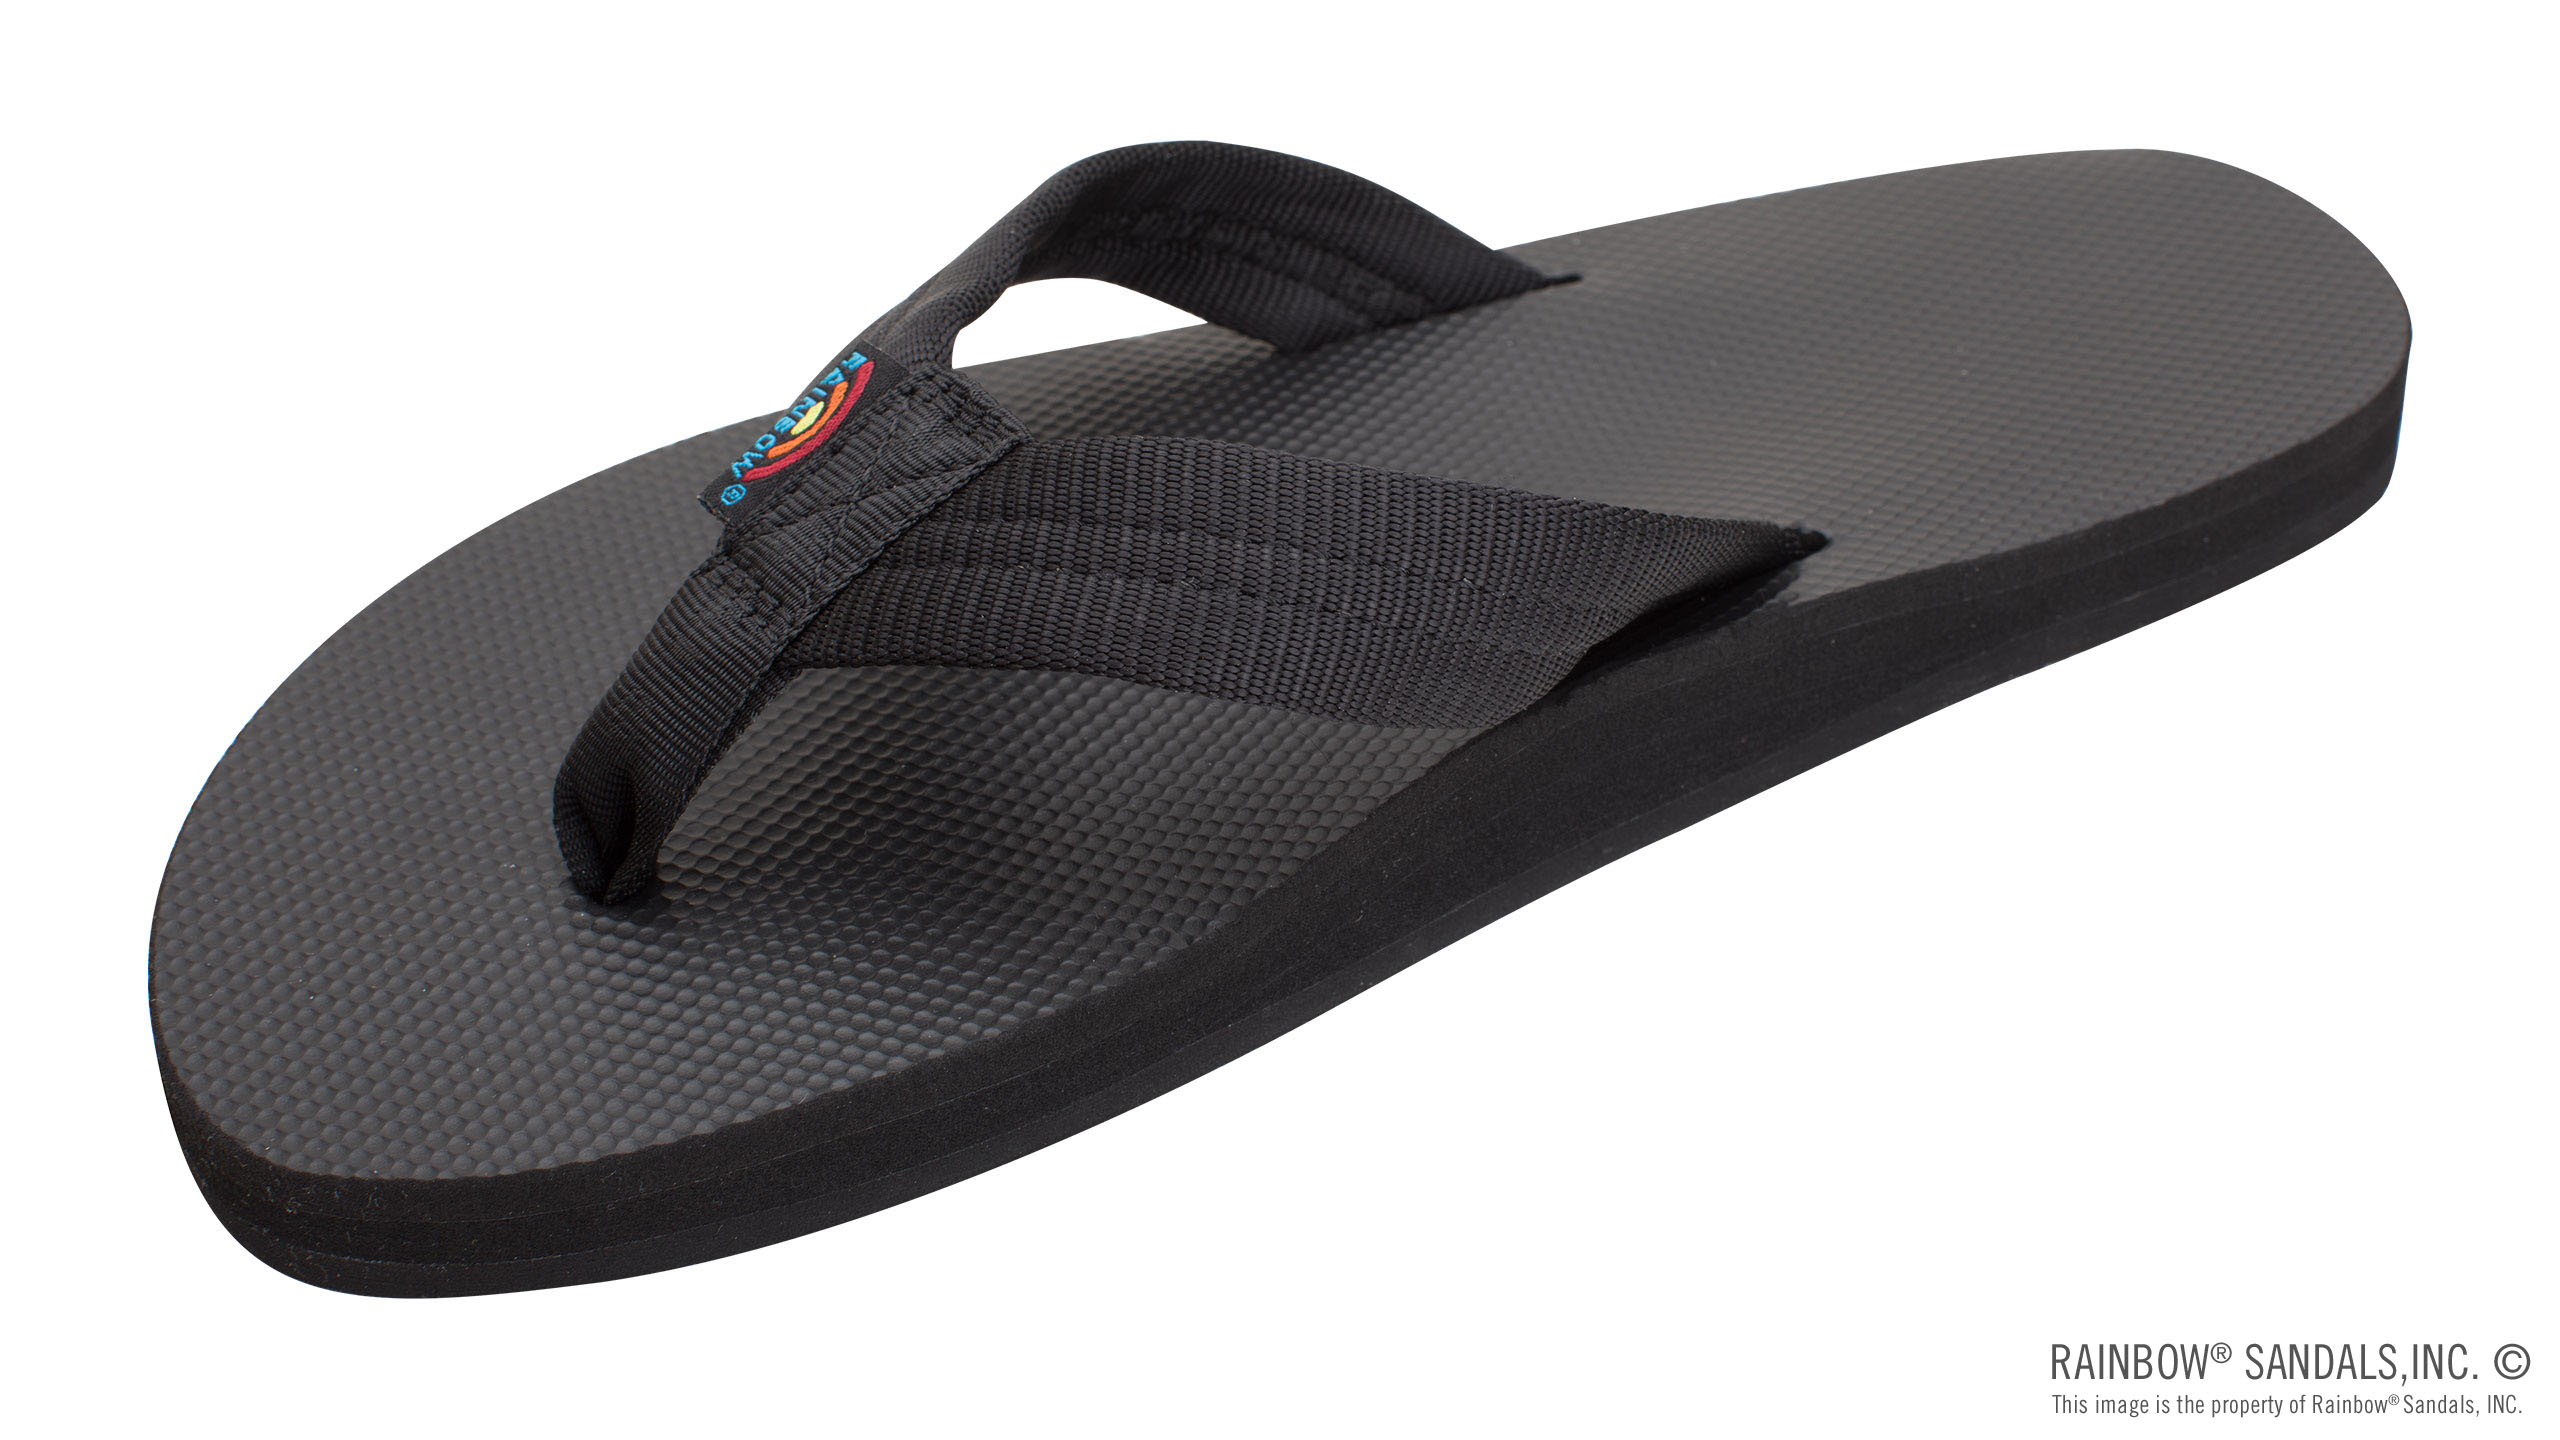 VONMAY Slides Sandals for Women and Men Sandals Soft Thick Sole Adjust